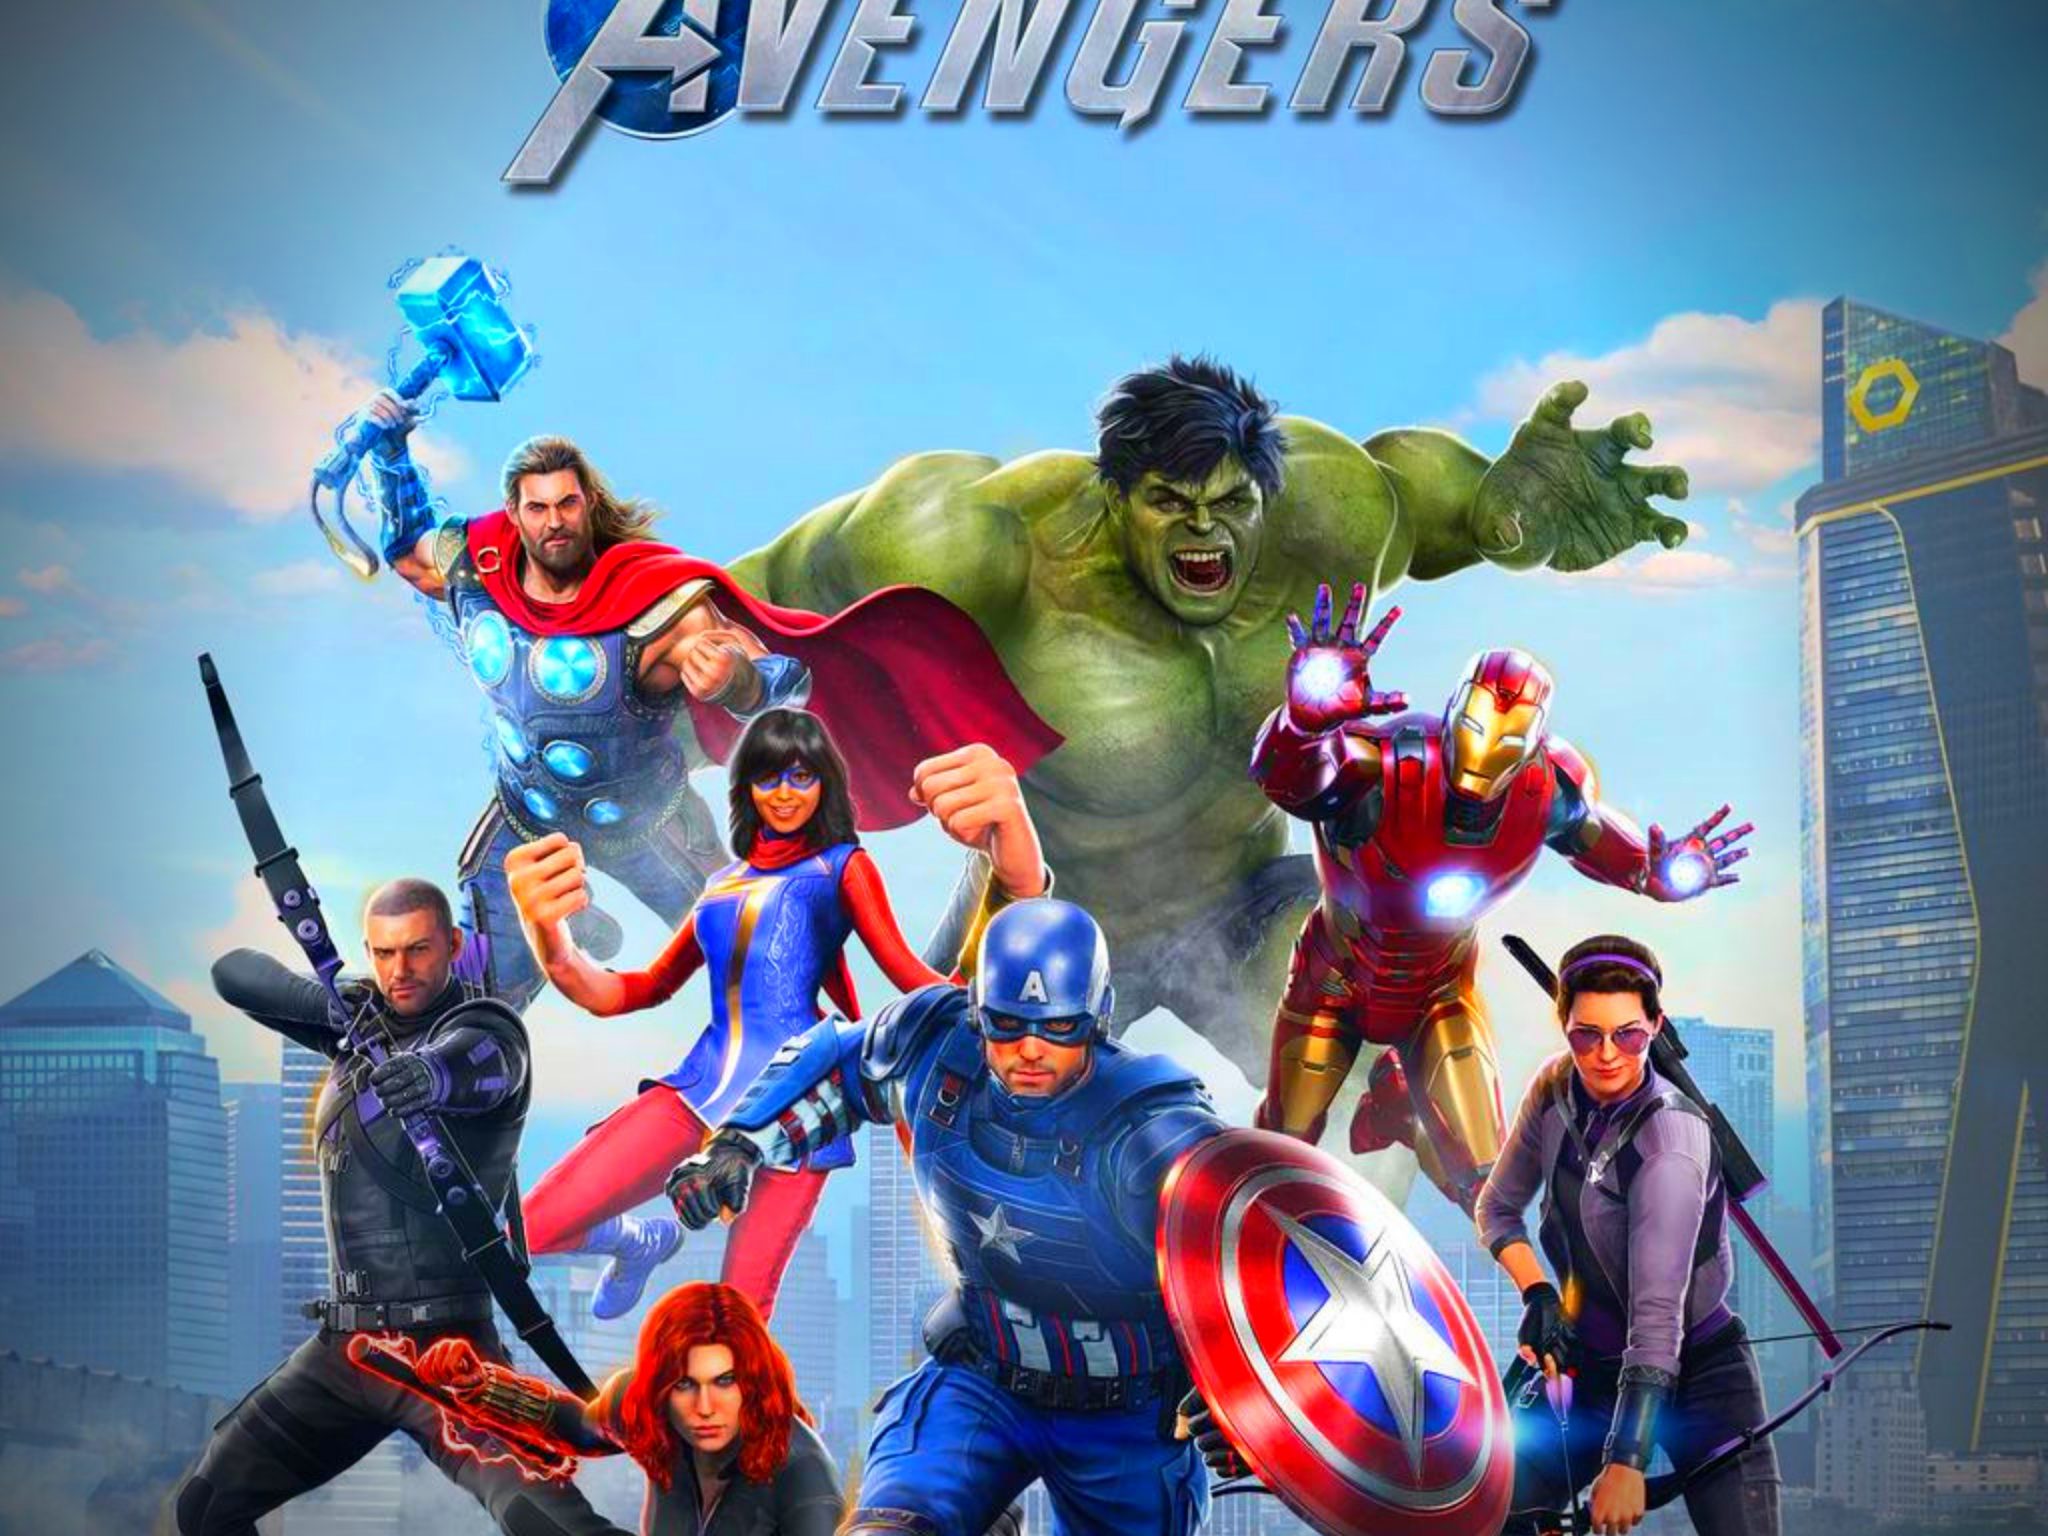 2048x1536 wallpaper Marvel Avengers iPad Wallpaper 2048x1536 pixels resolution